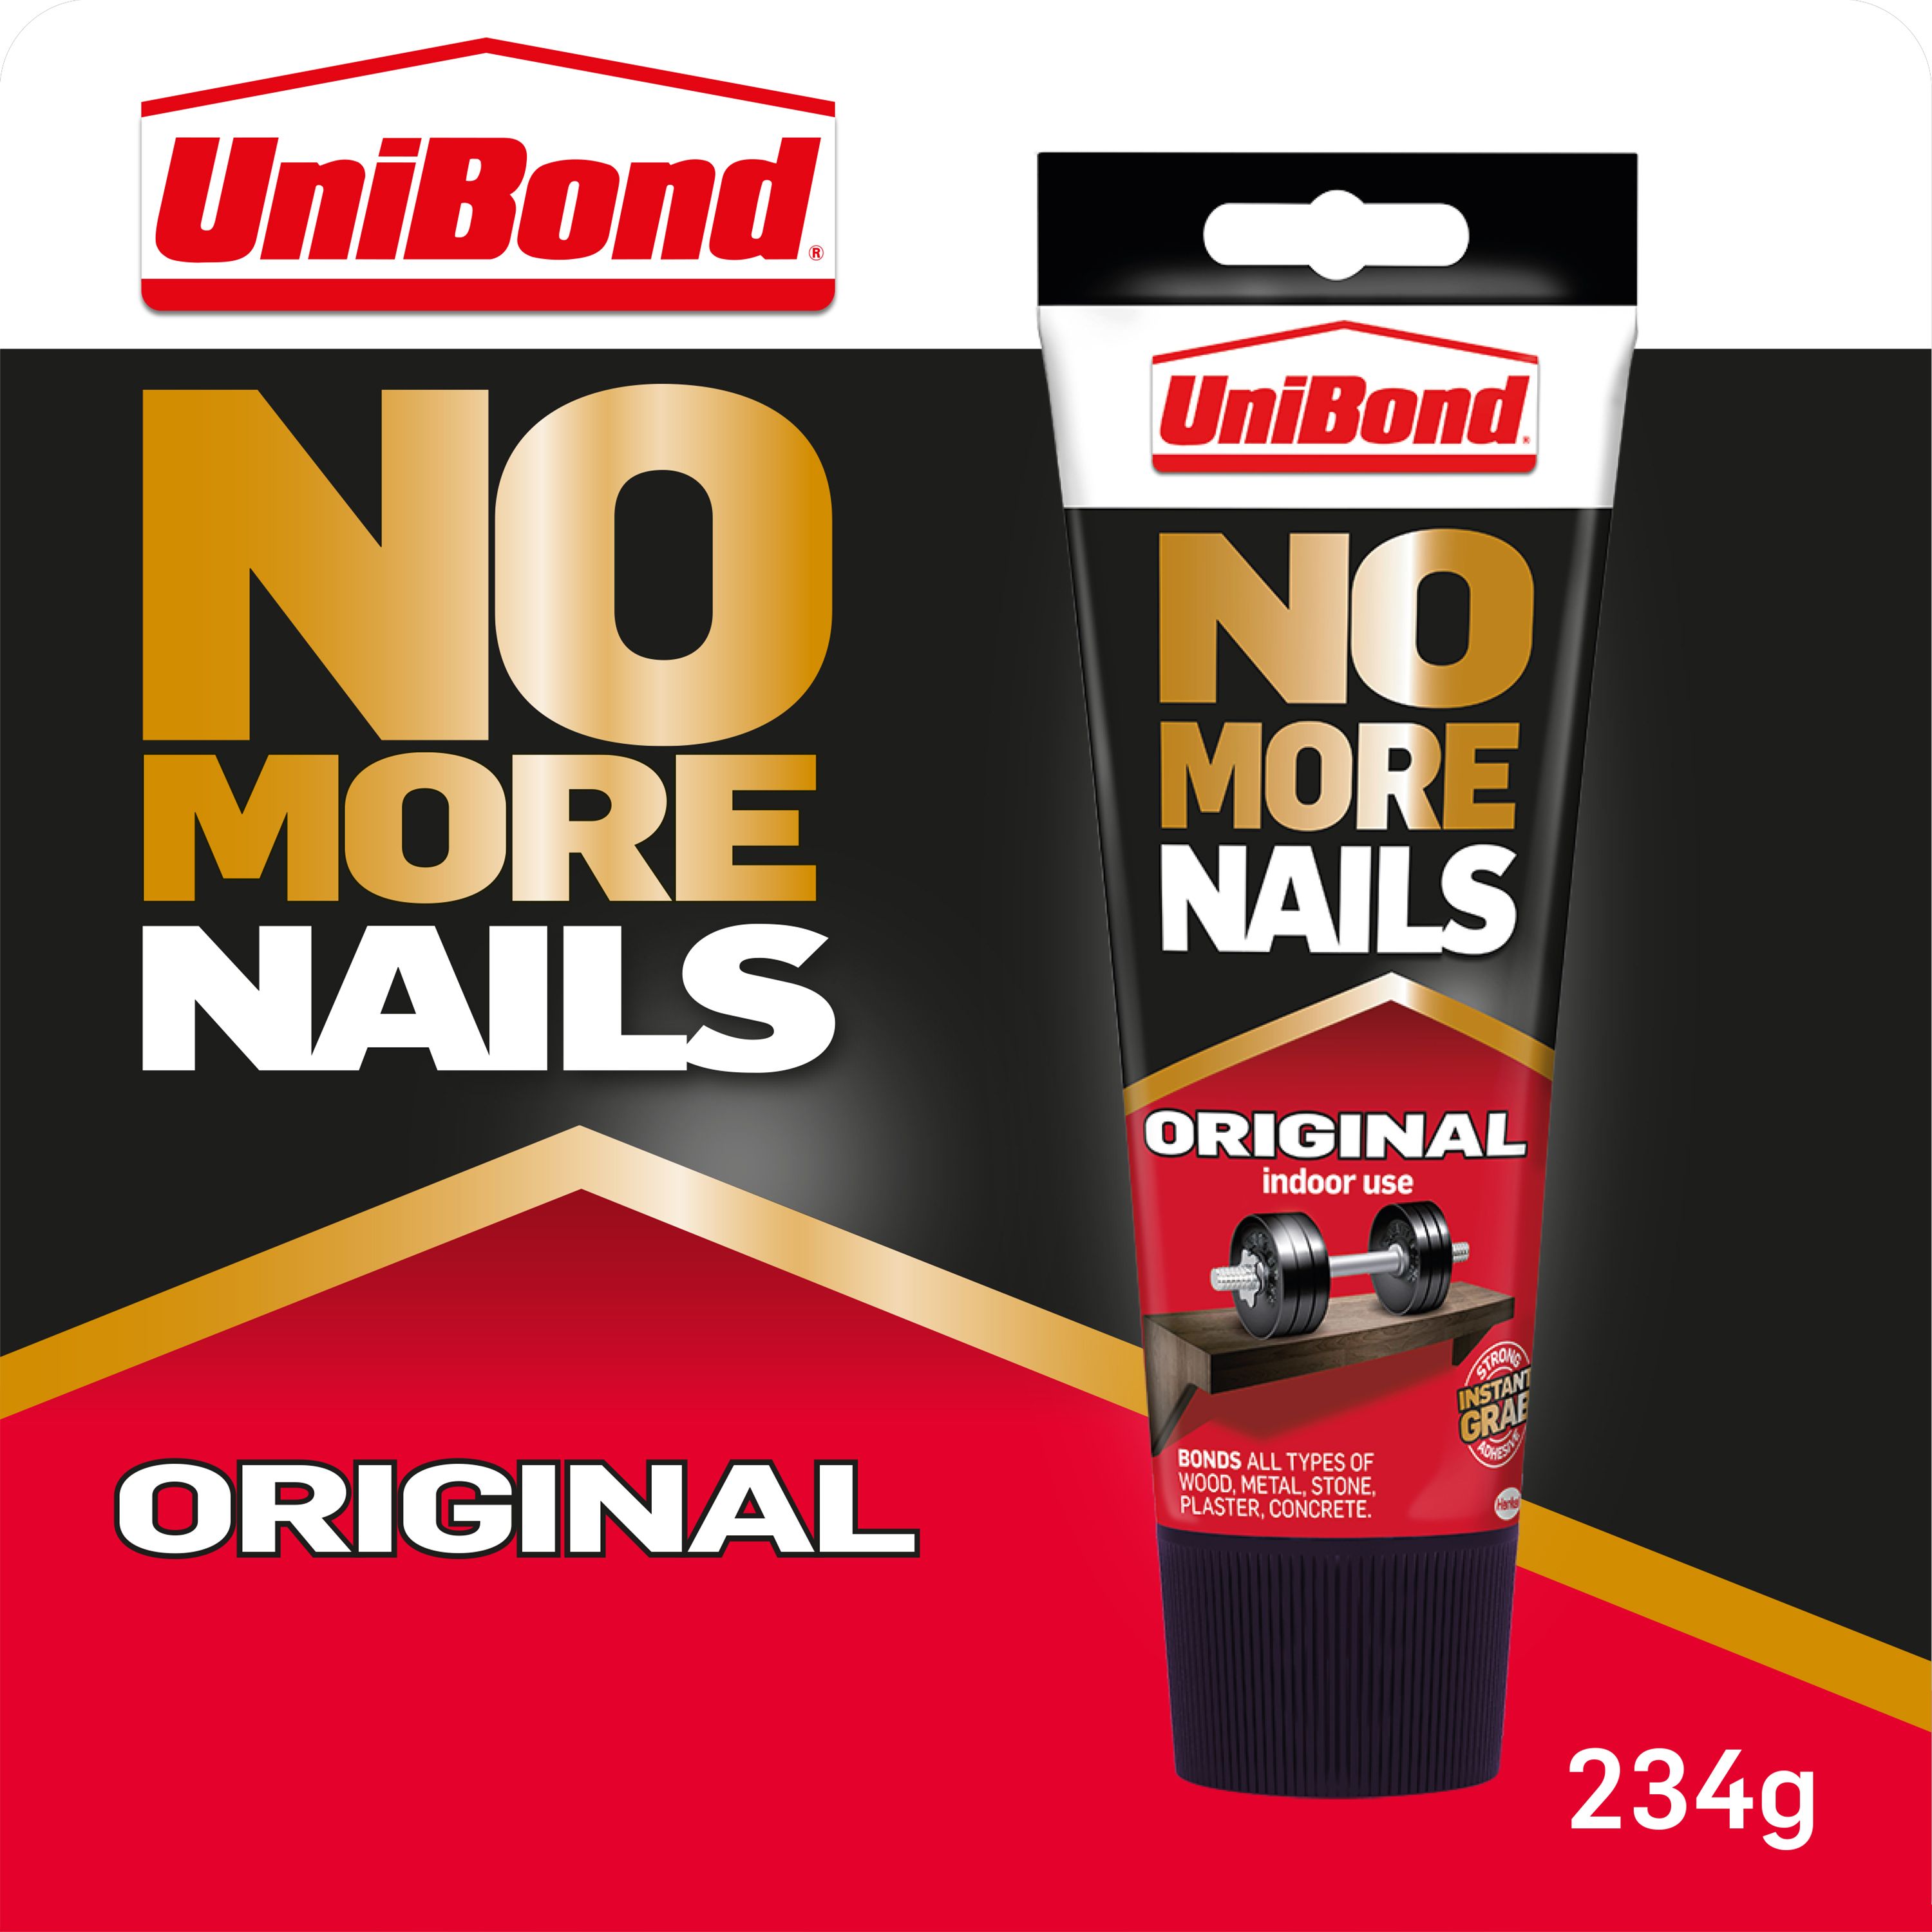 UniBond No More Nails Original White Grab adhesive 234g